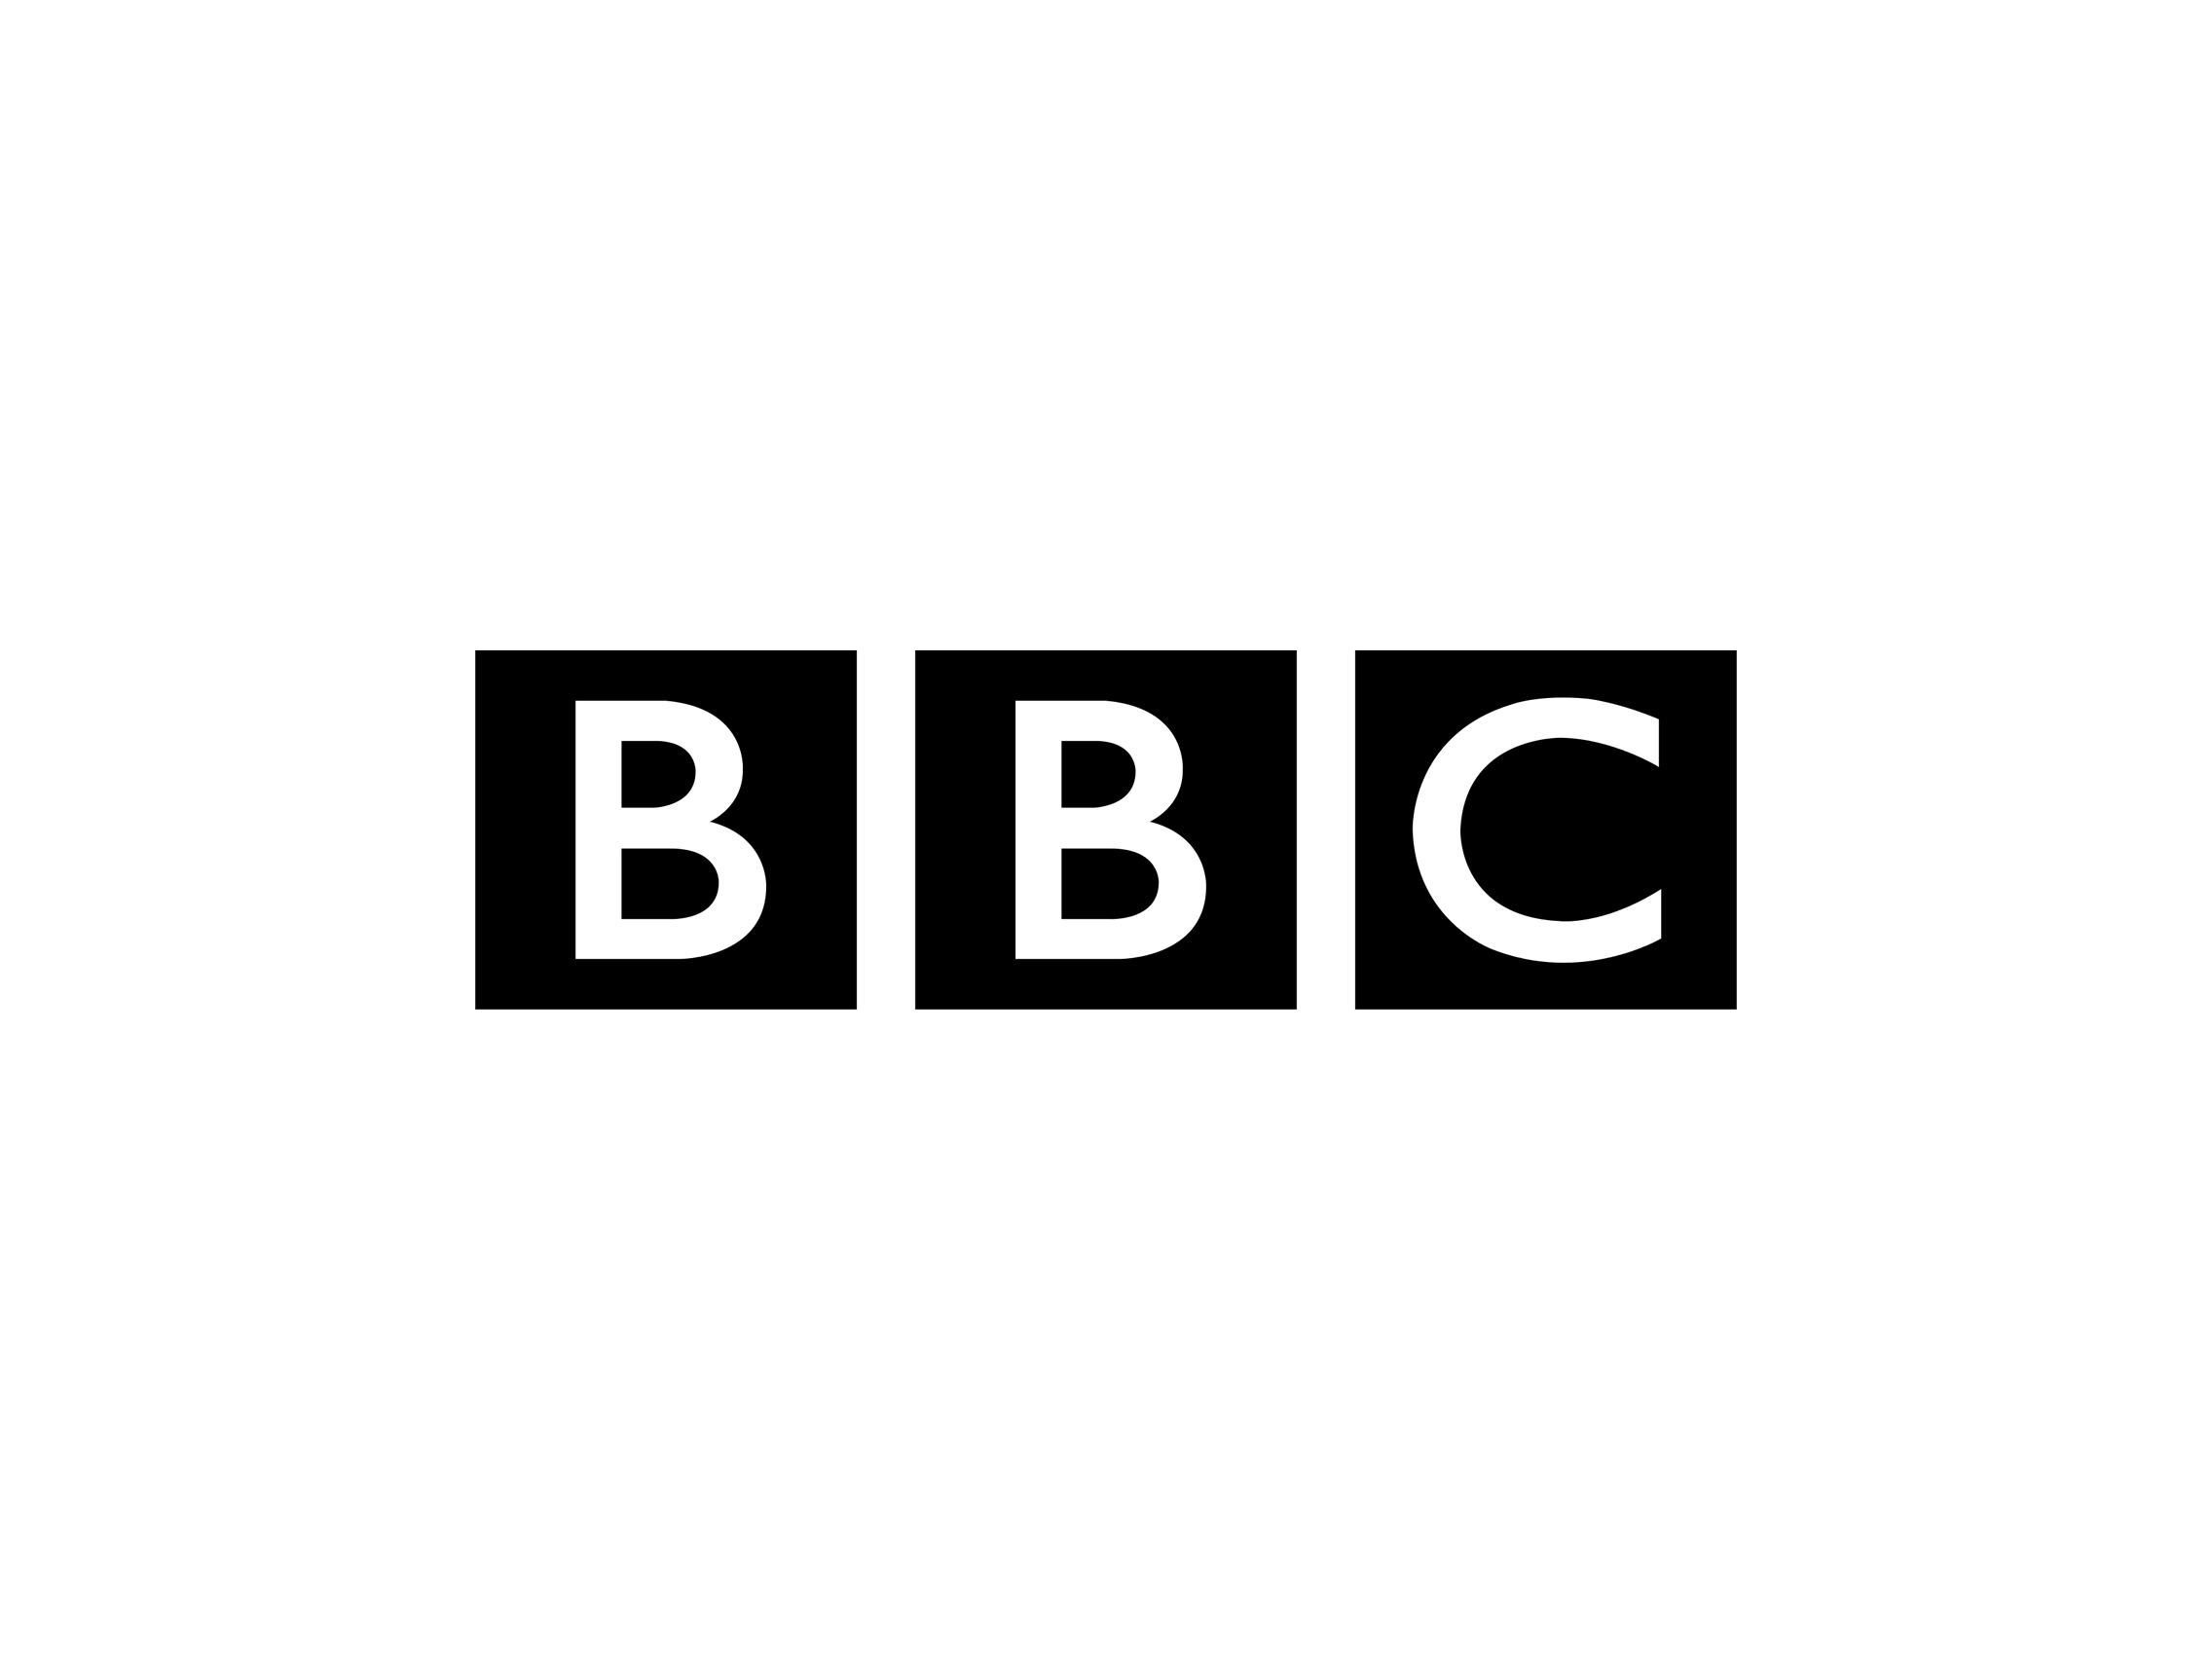 BBC-logo.png